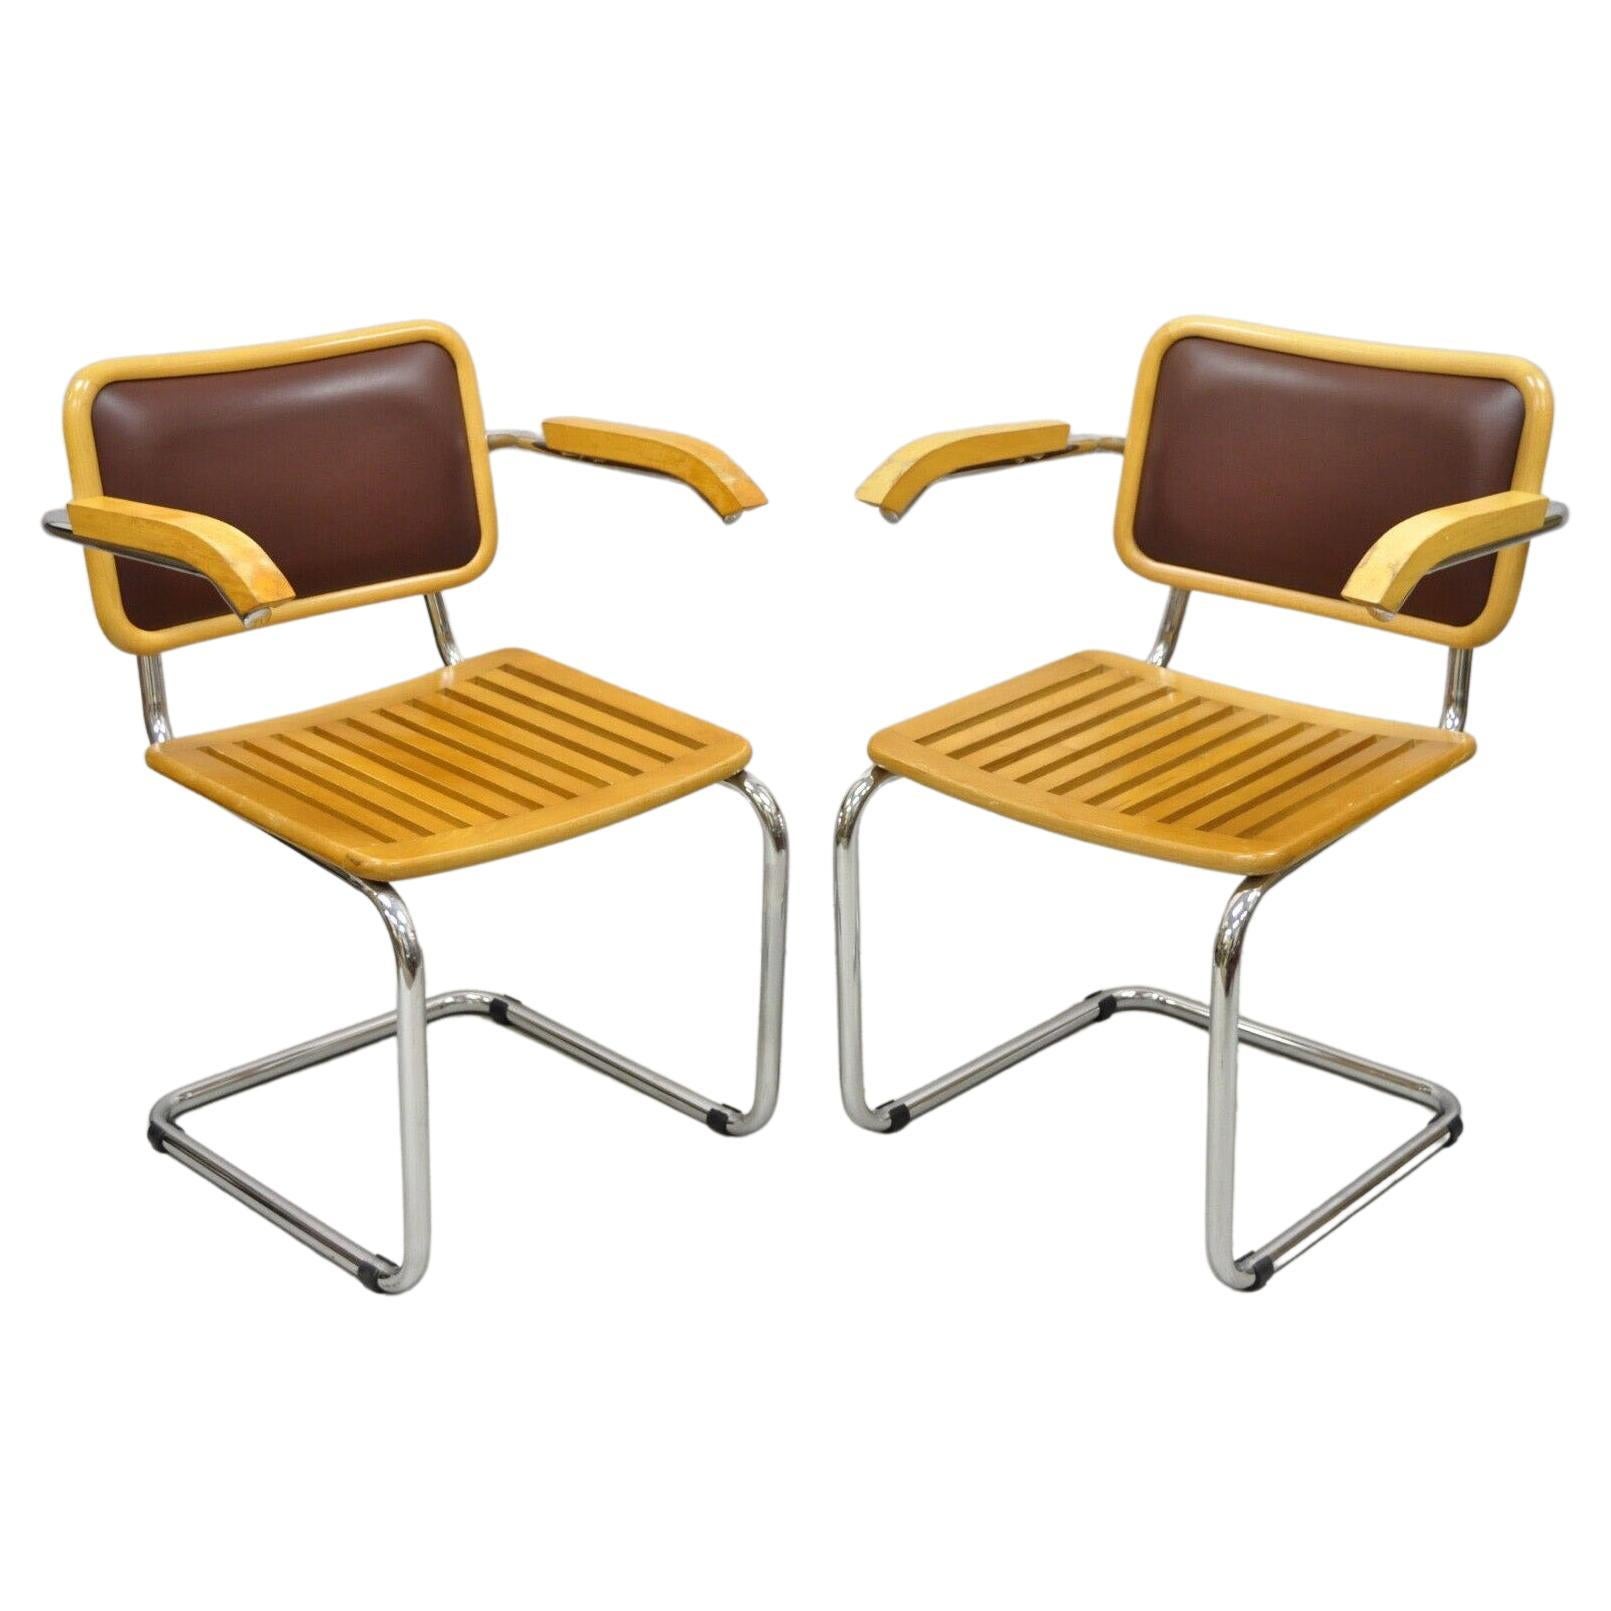 Marcel Breuer Cesca Chair Cantilever Chrome Frame Wood Seat, a Pair For Sale